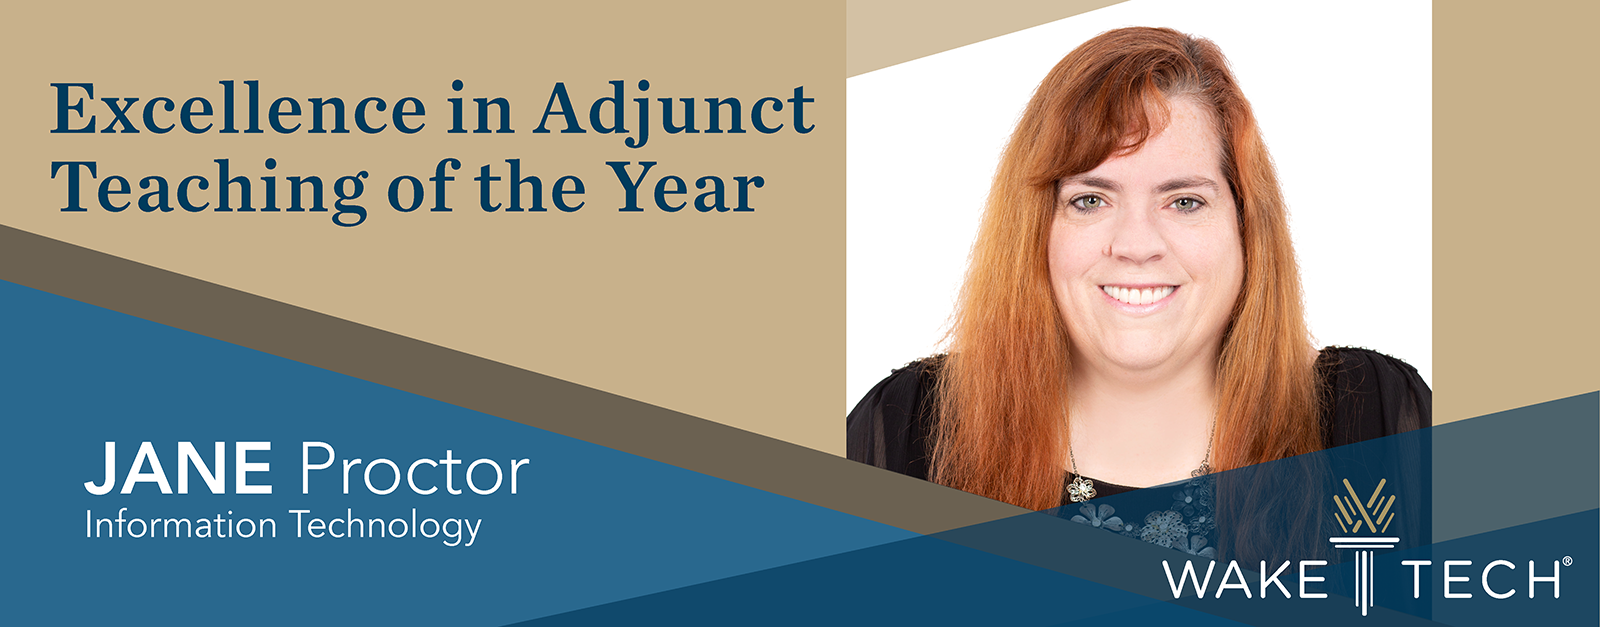 Jane Proctor - Adjunct Excellence in Teaching 